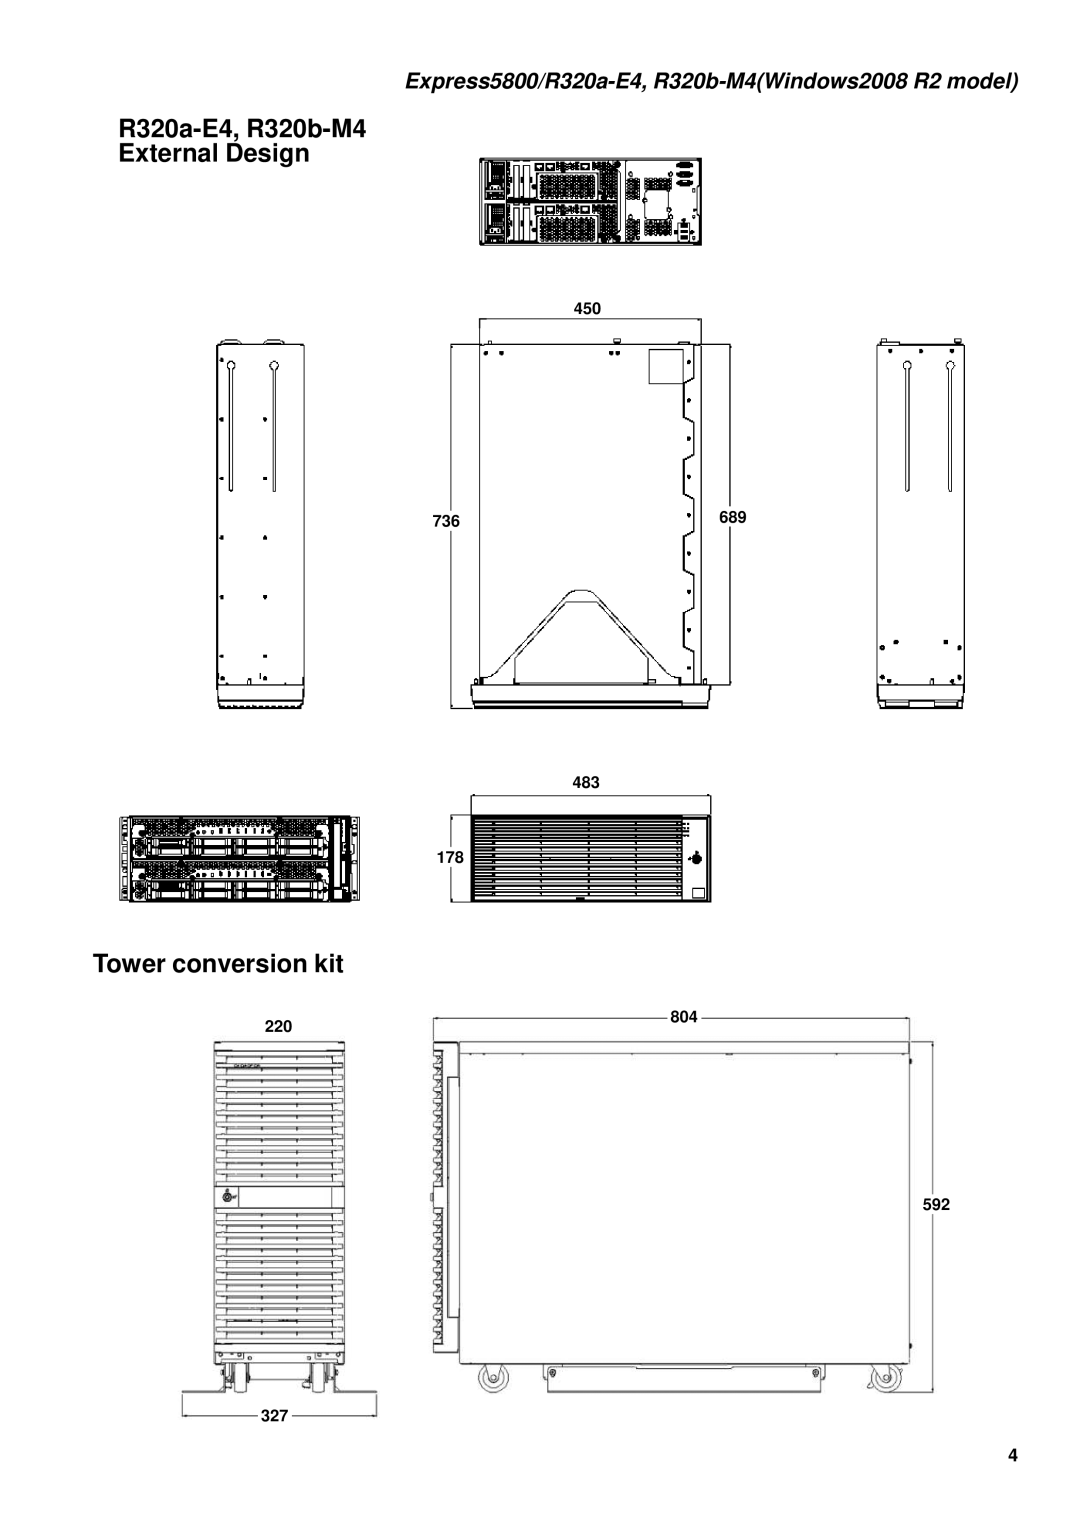 NEC R320B-M4 R320a-E4, R320b-M4 External Design, Tower conversion kit, Express5800/R320a-E4, R320b-M4Windows2008R2 model 